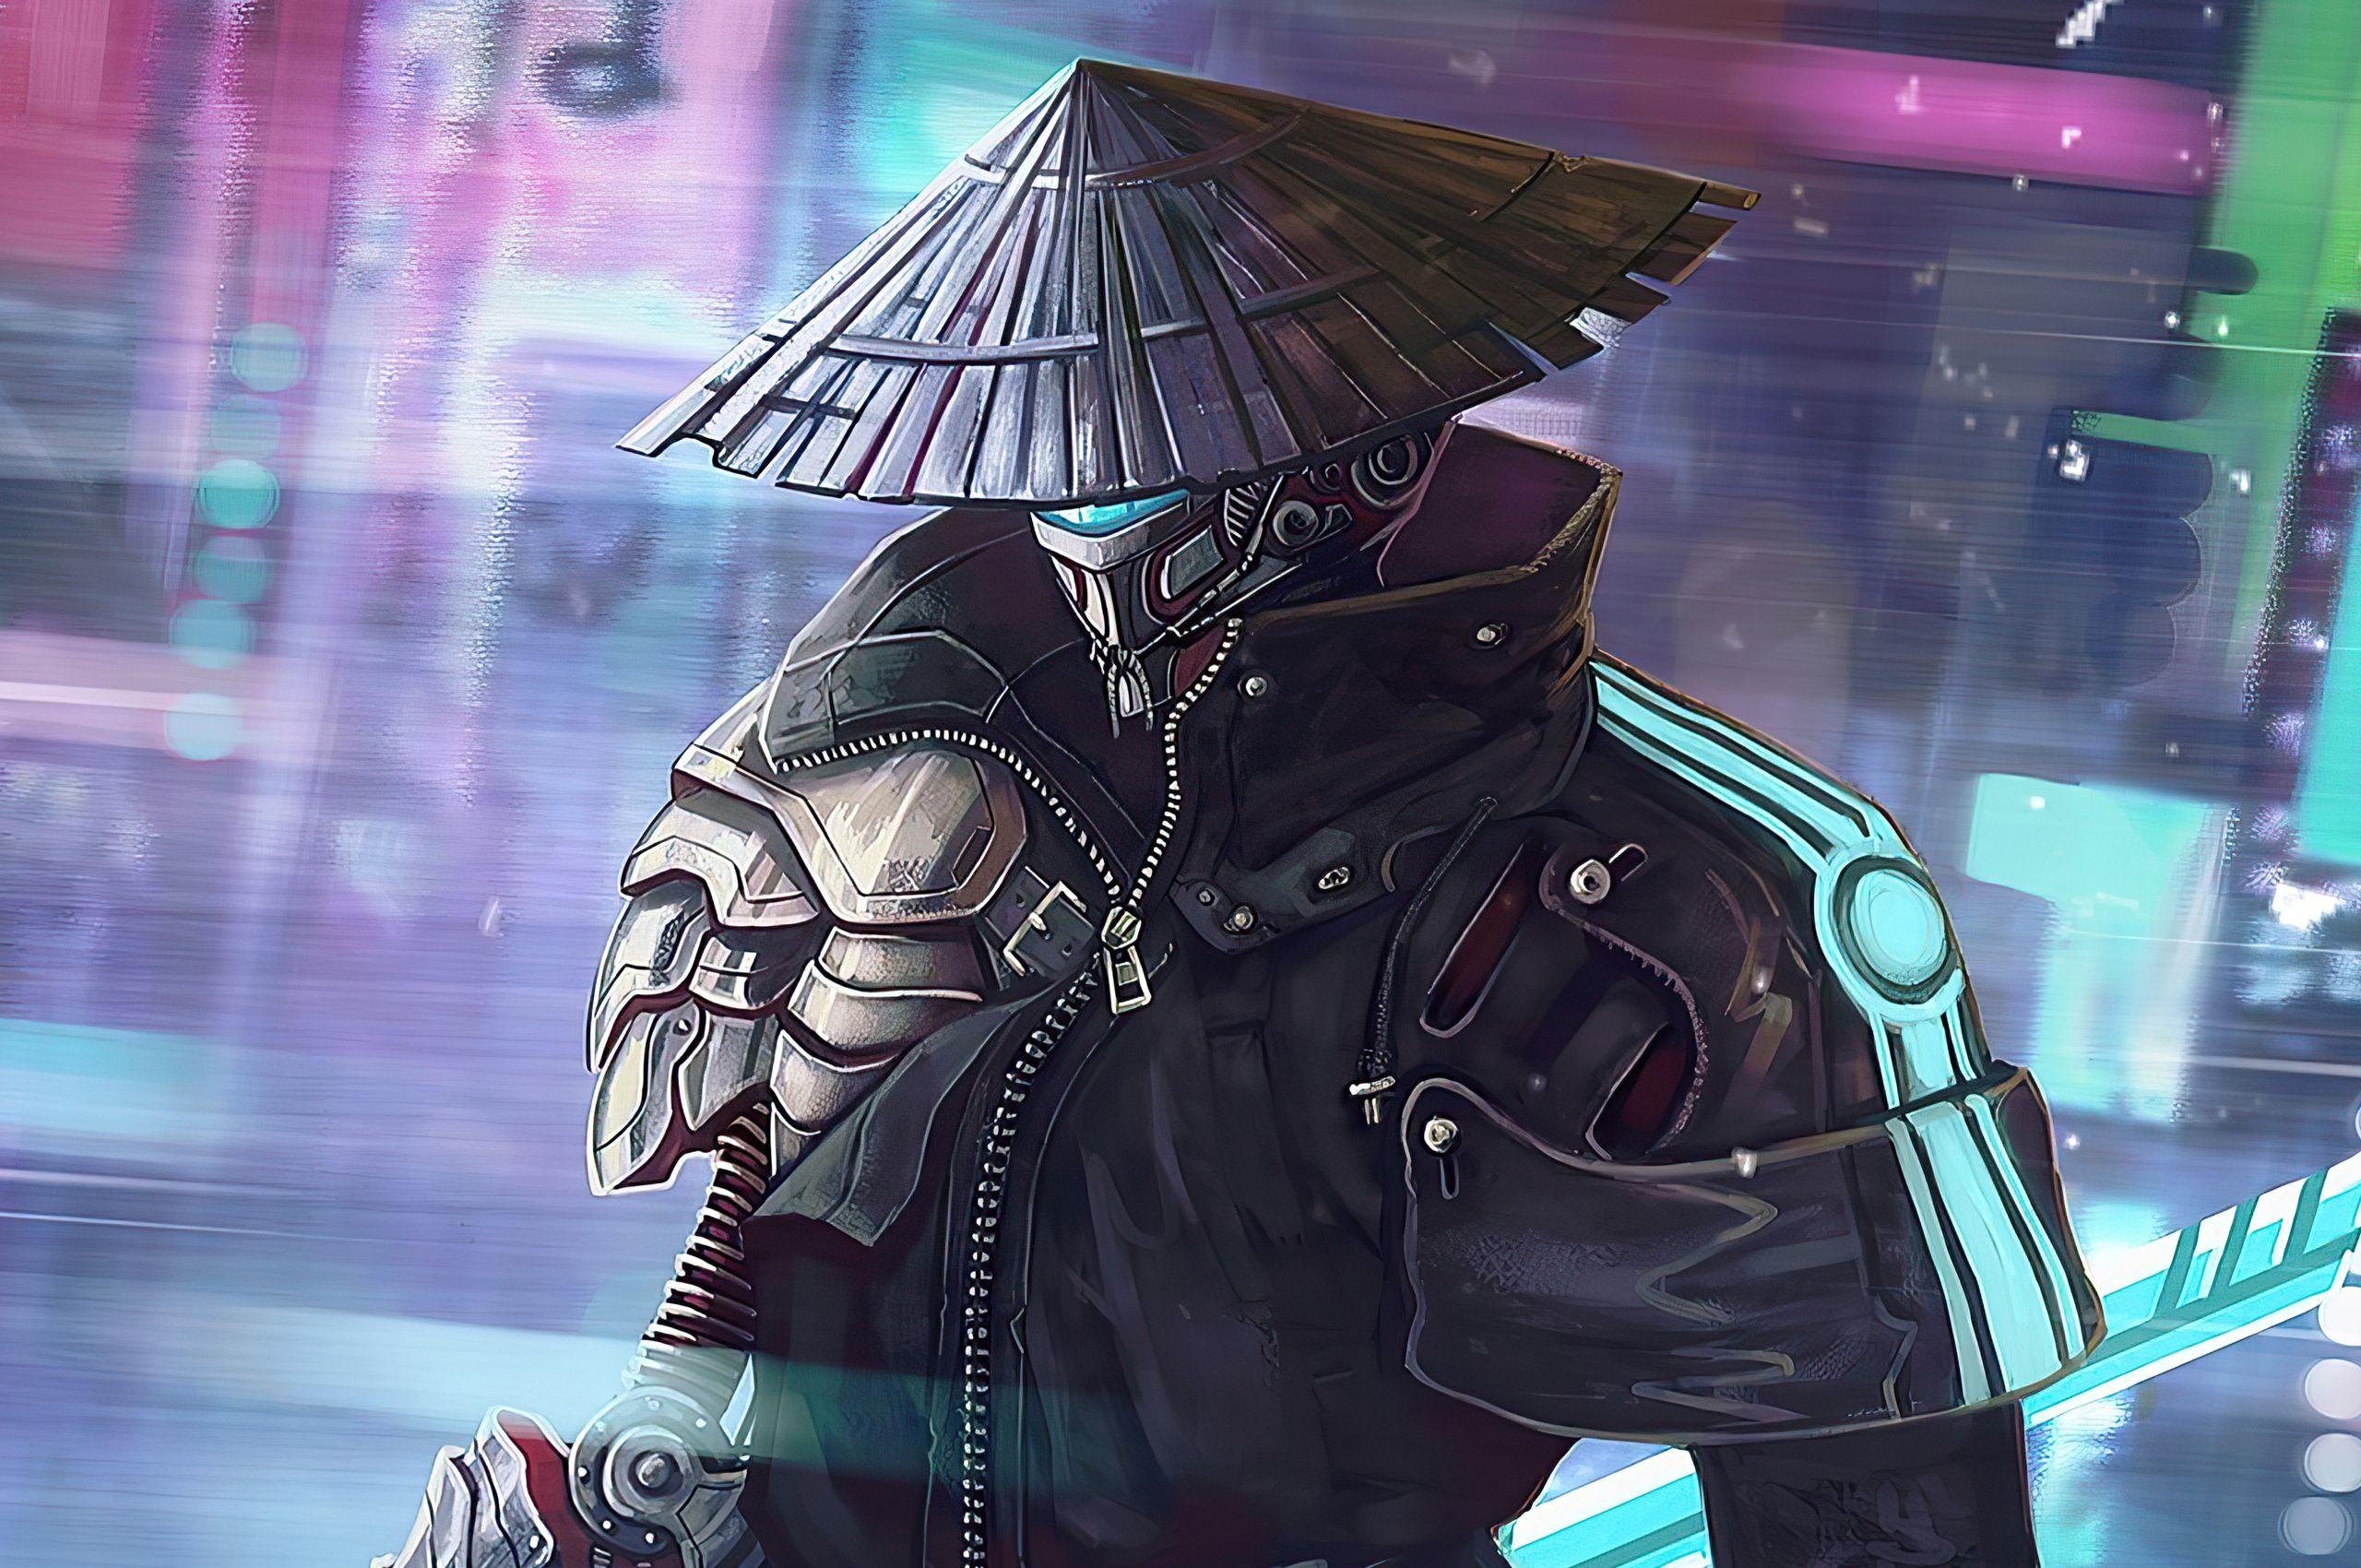 Cyberpunk Samurai 4k Chromebook Pixel HD 4k Wallpaper, Image, Background, Photo and Picture